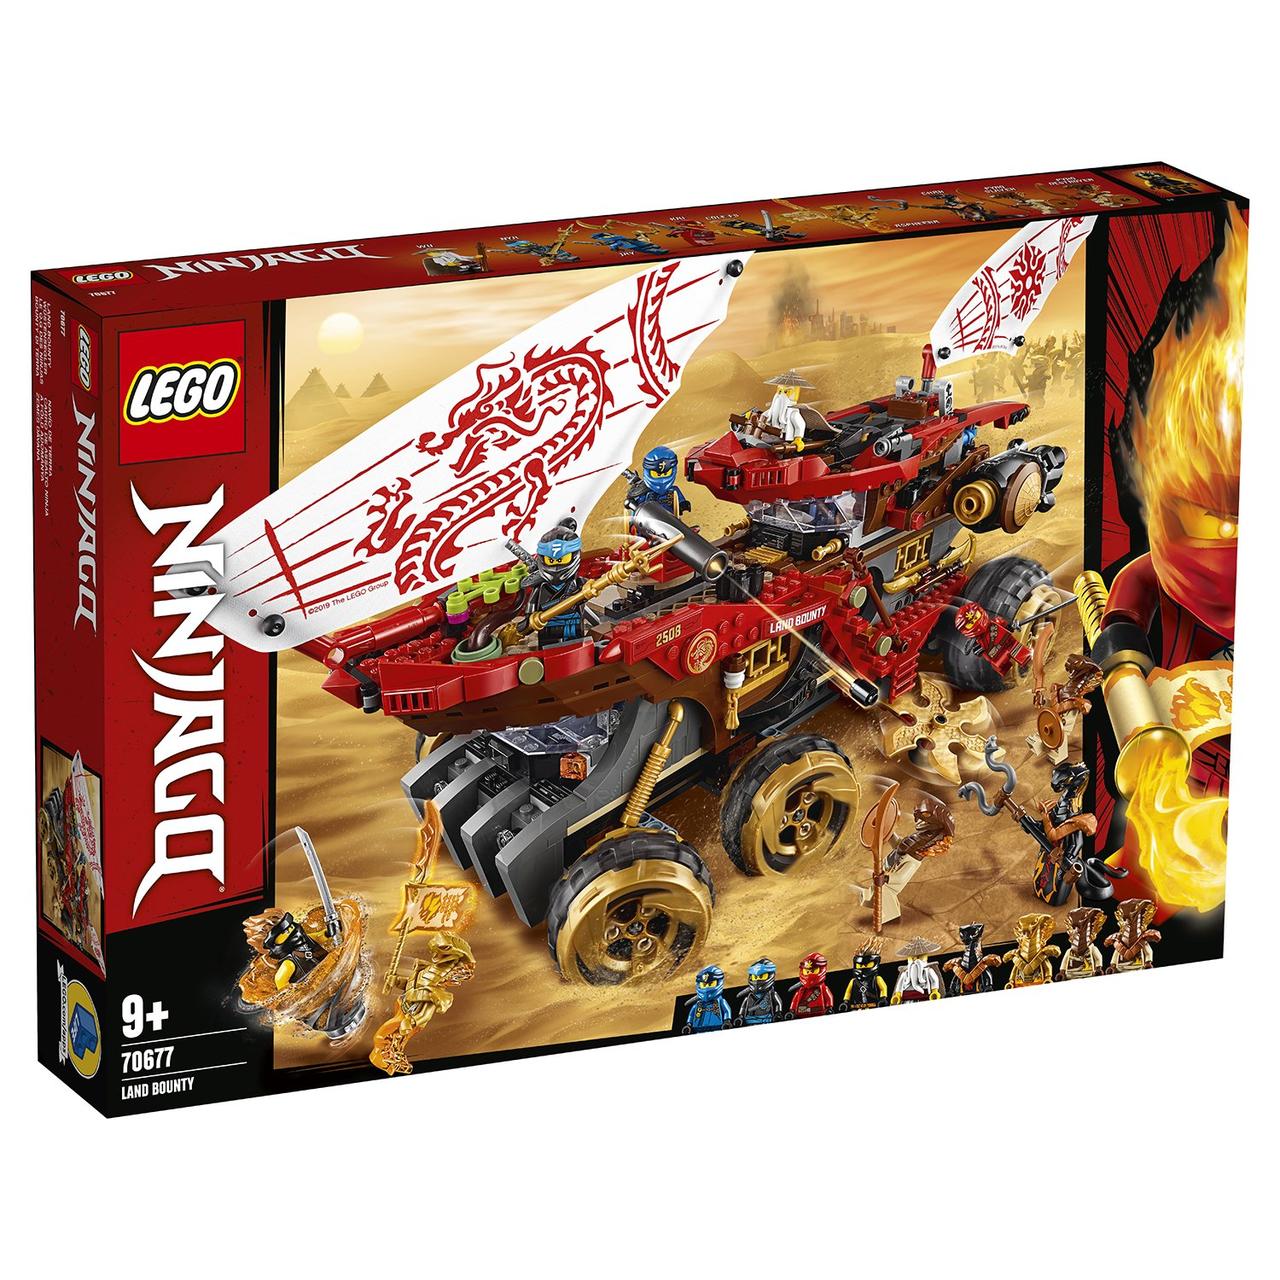 70677 Lego Ninjago Райский уголок, Лего Ниндзяго